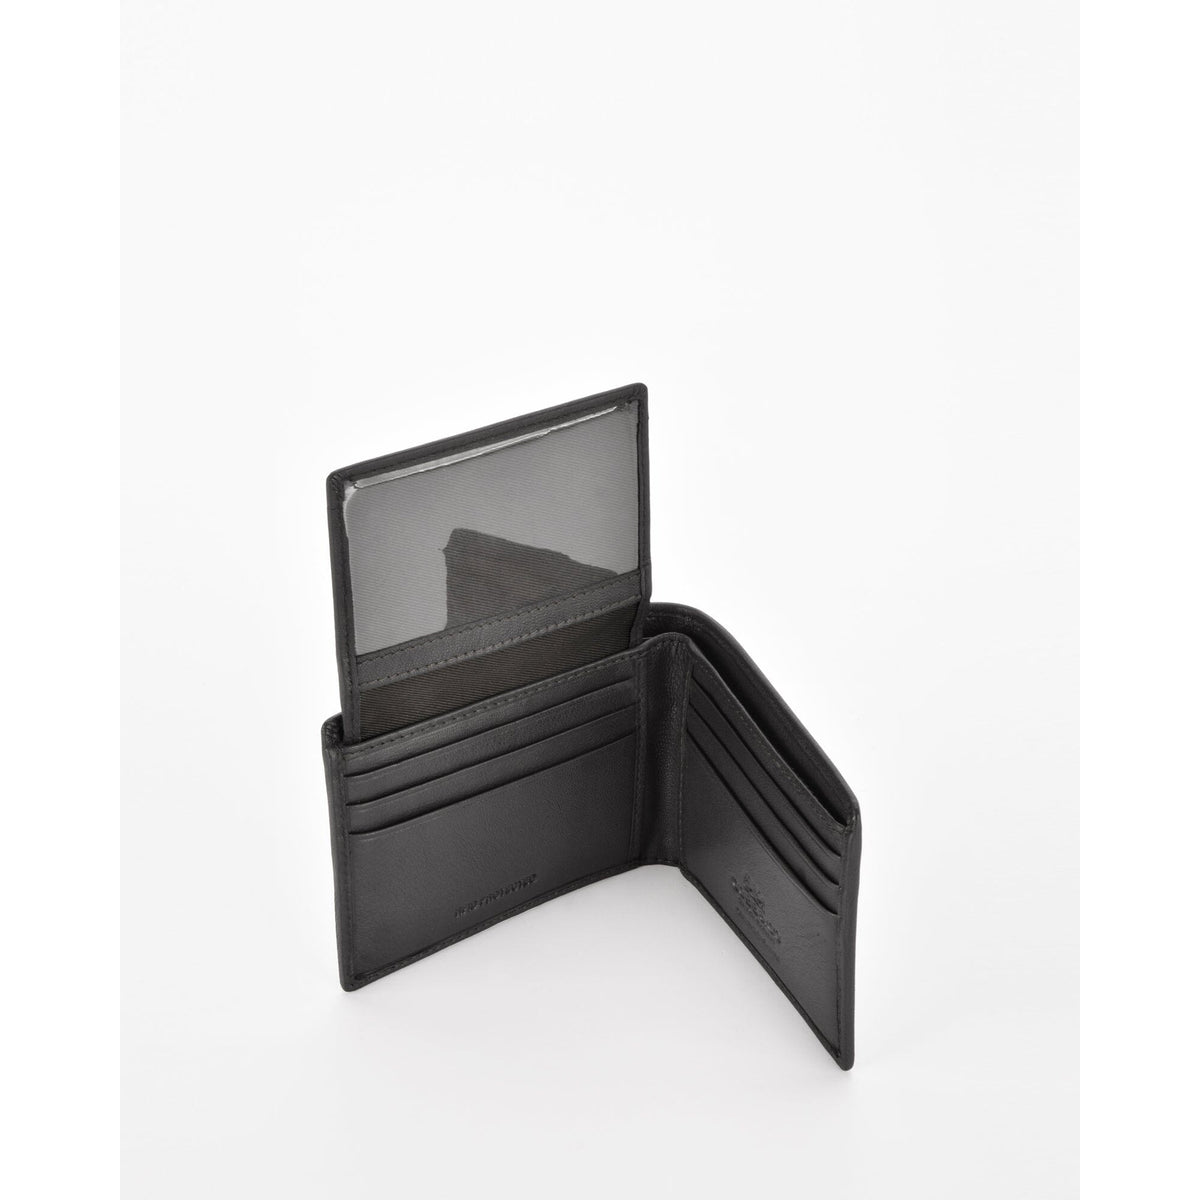 Jackson Leather RFID Safe Wallet